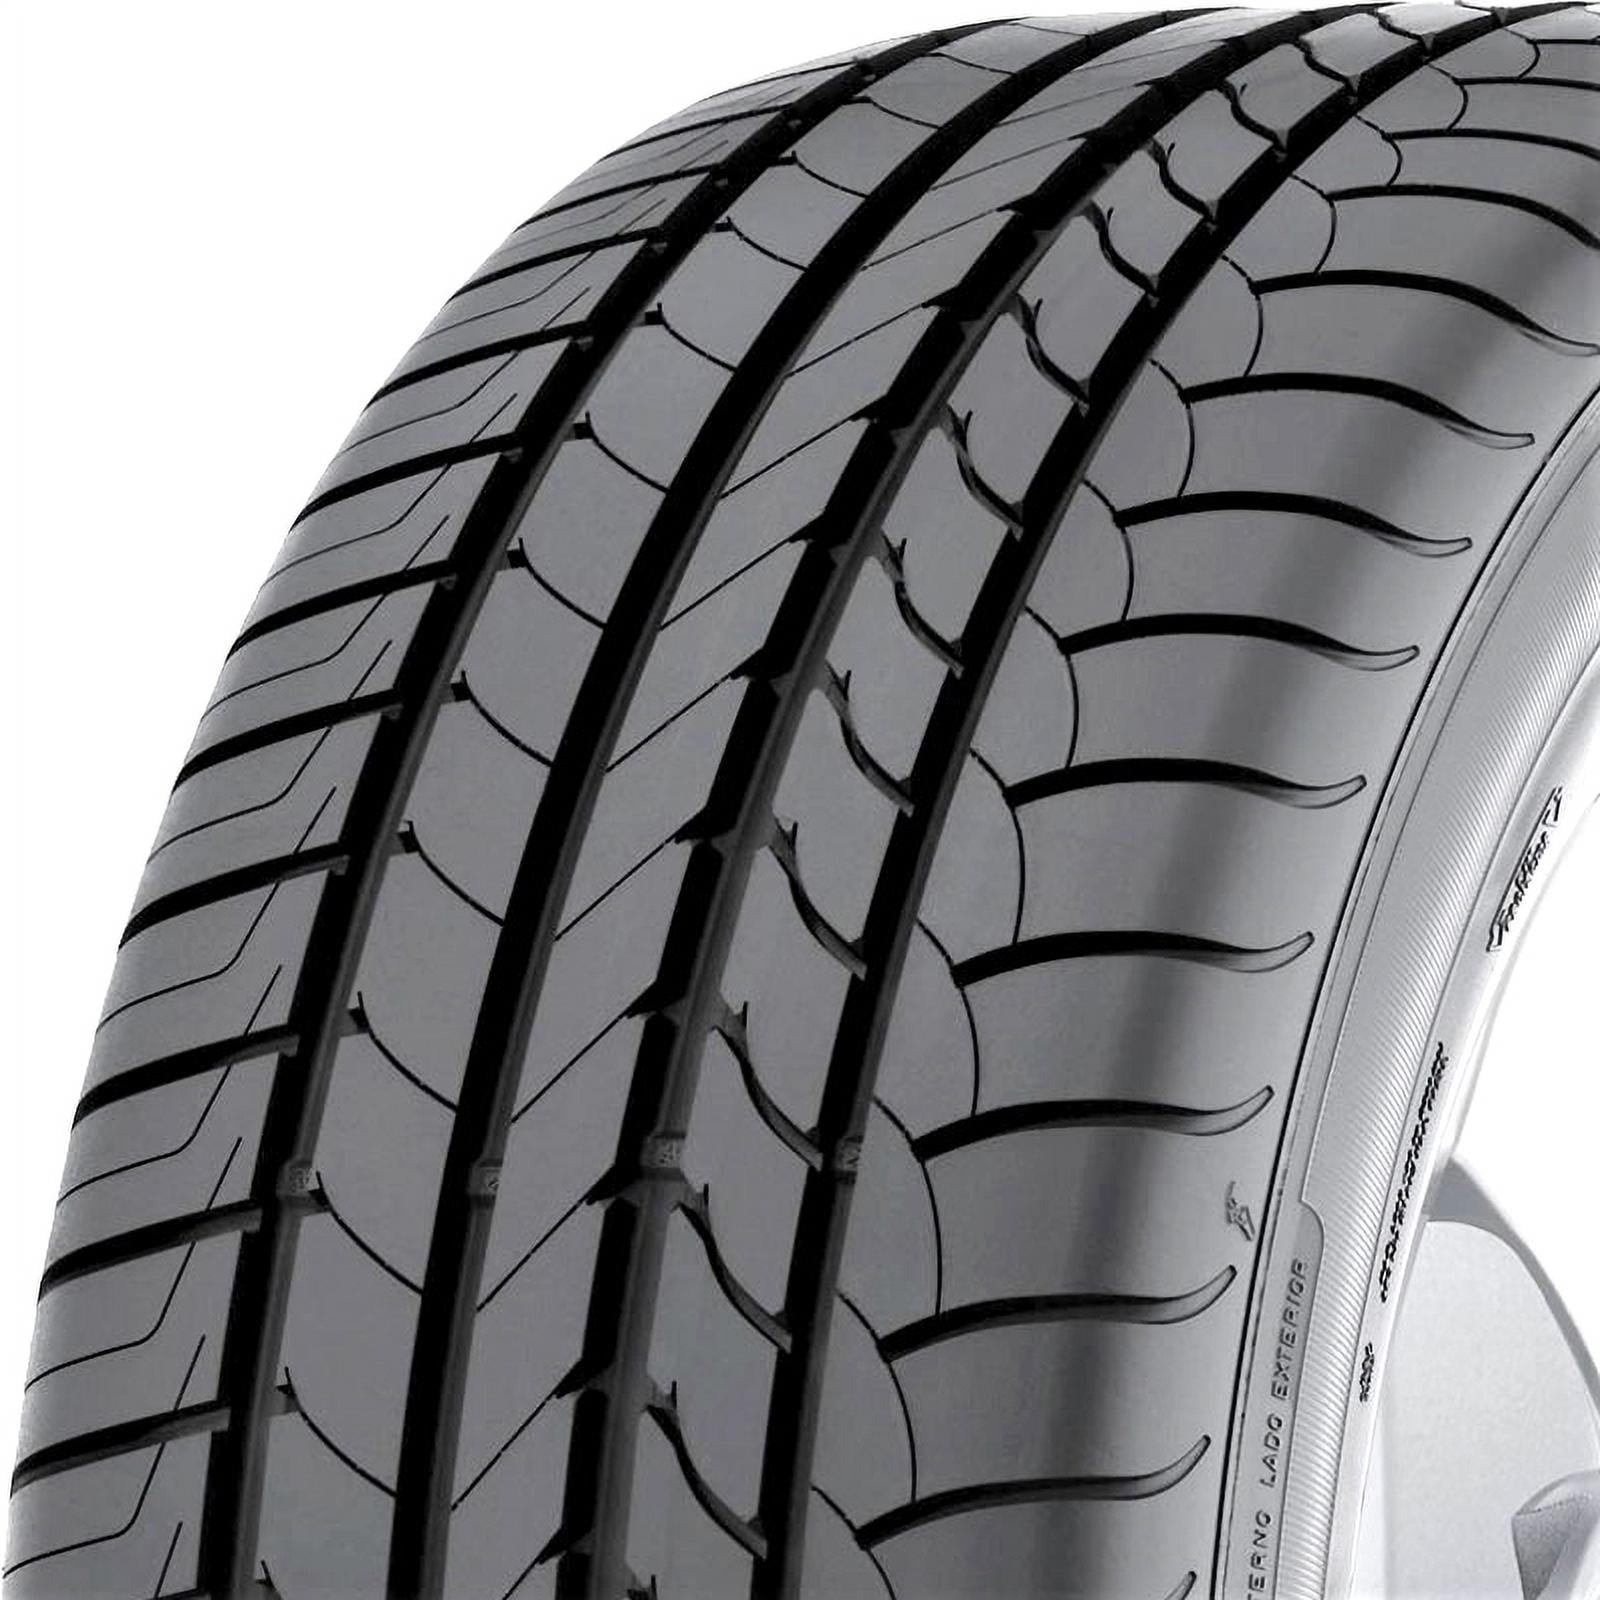 255/40R18 ROF Performance 95V Goodyear EfficientGrip Tire